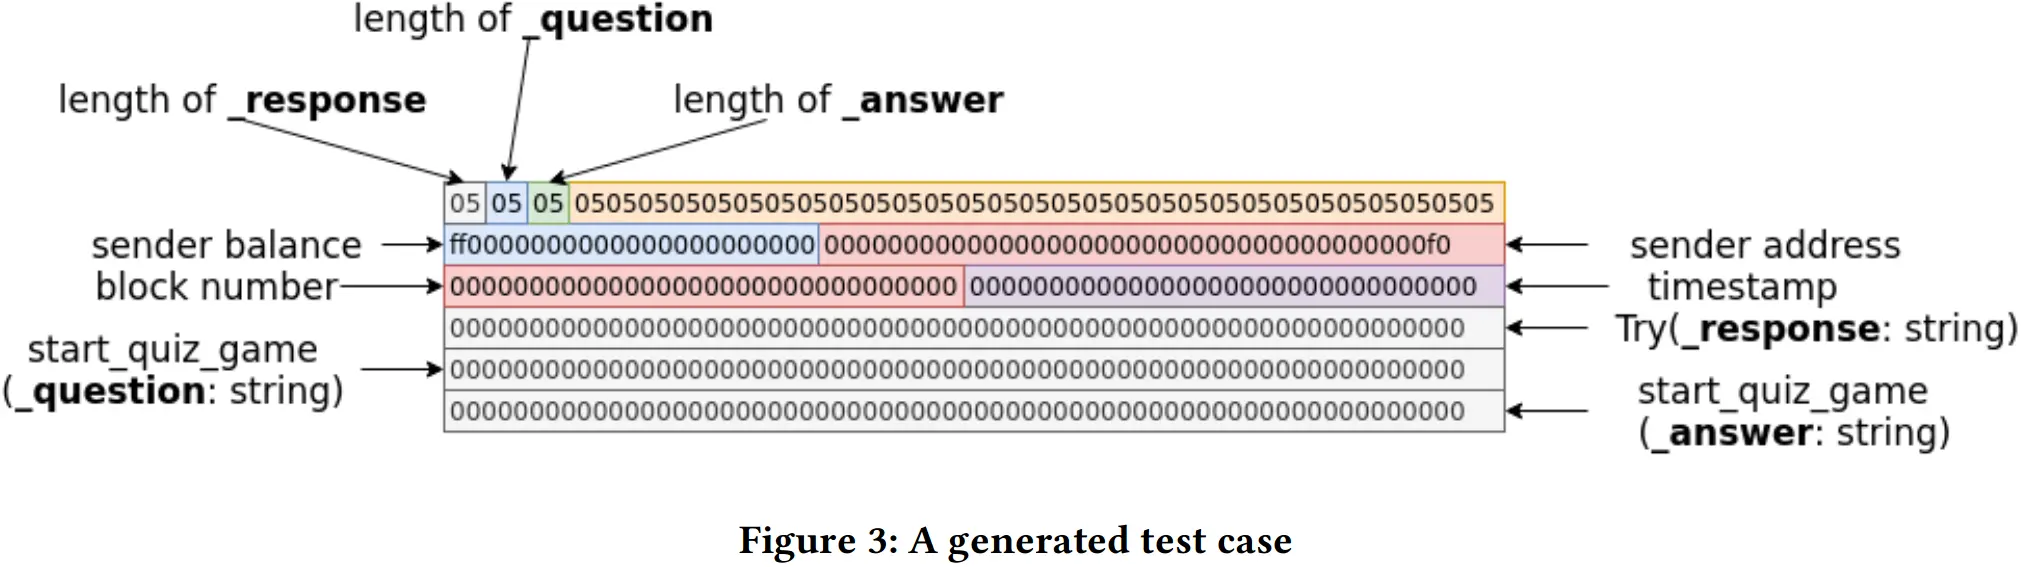 Figure 3: A generated test case